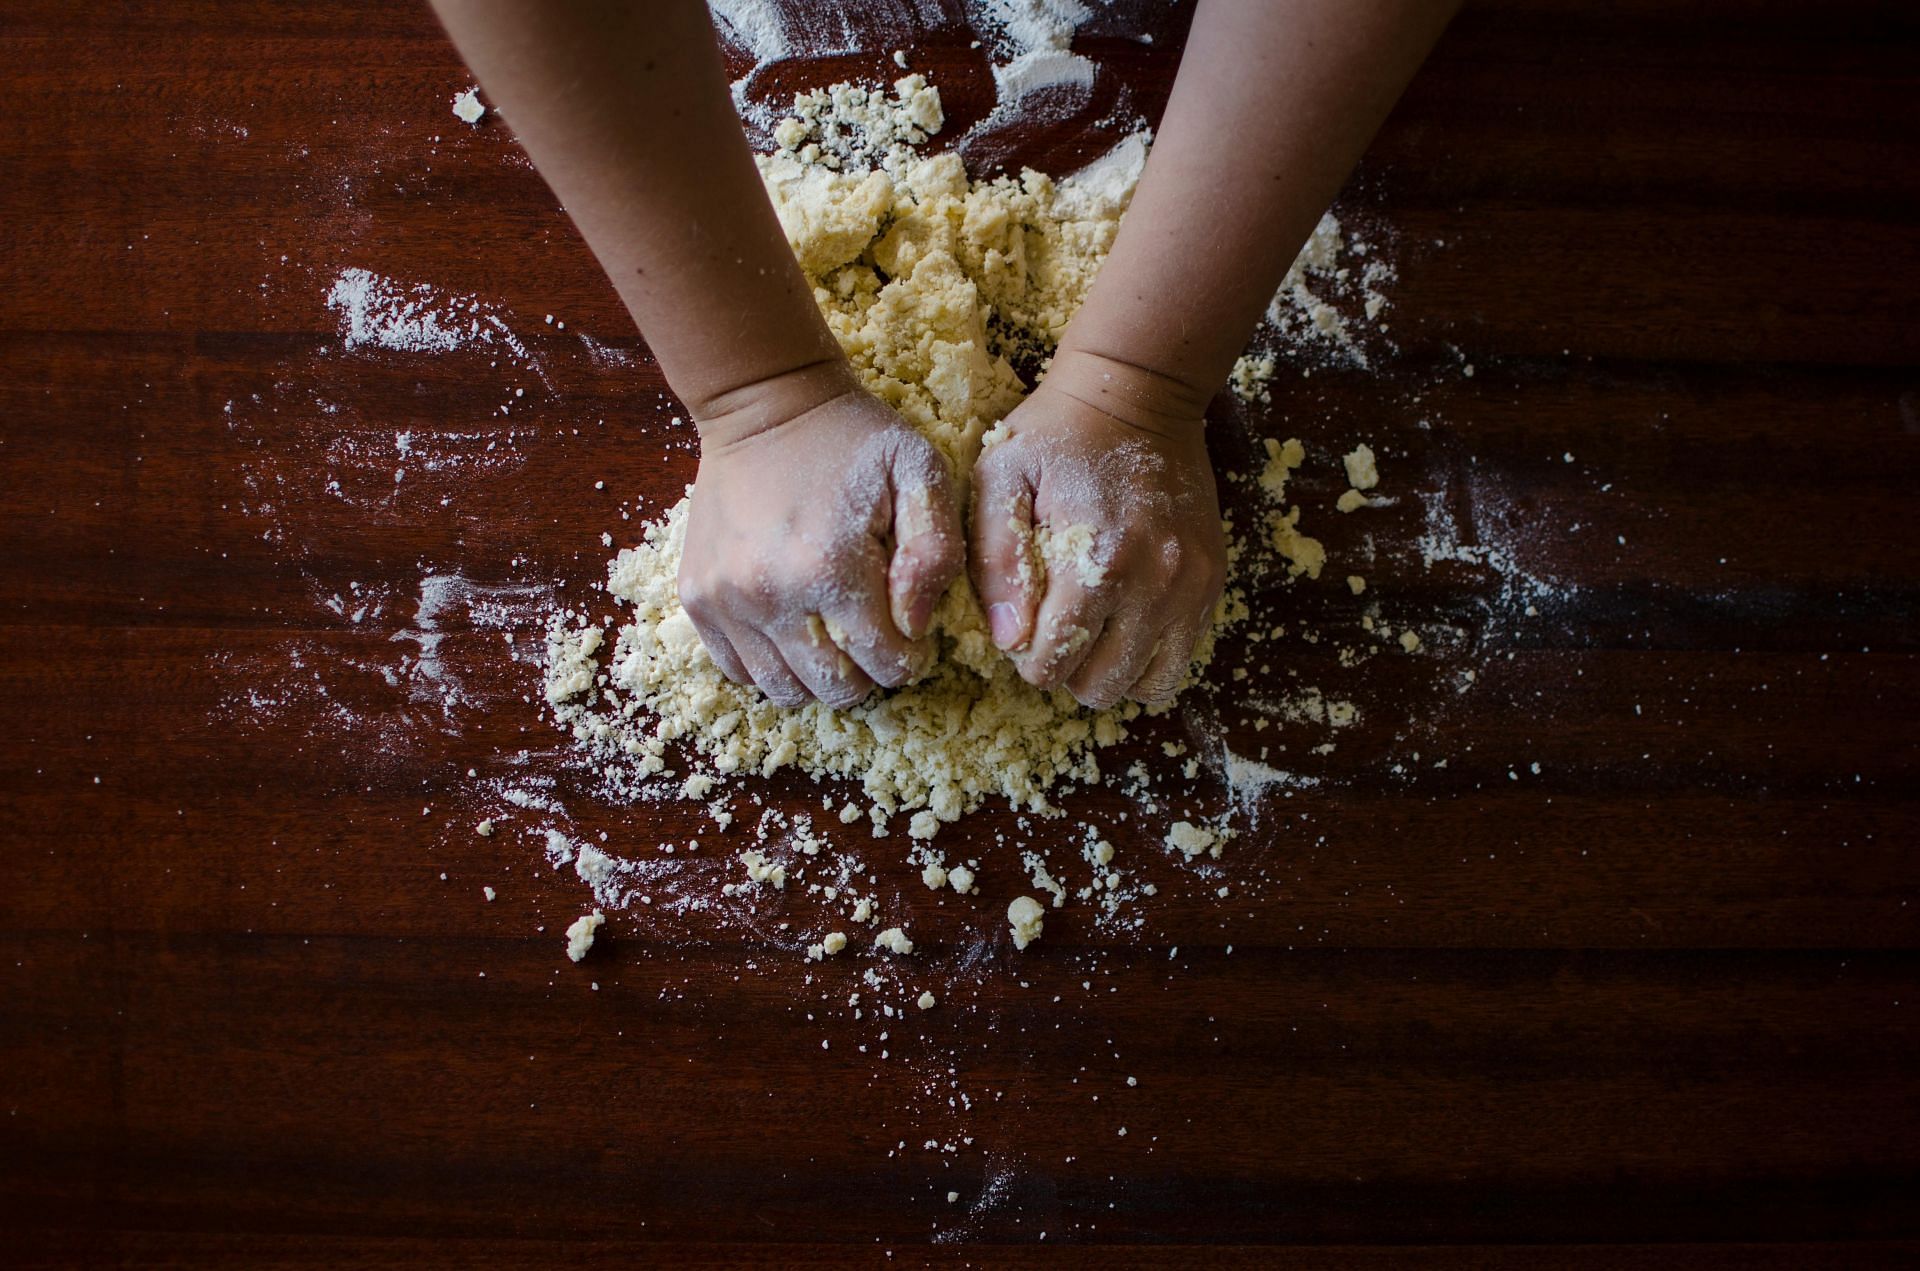 The healthiest flour alternatives (image sourced via Pexels / Photo by life pf pix)